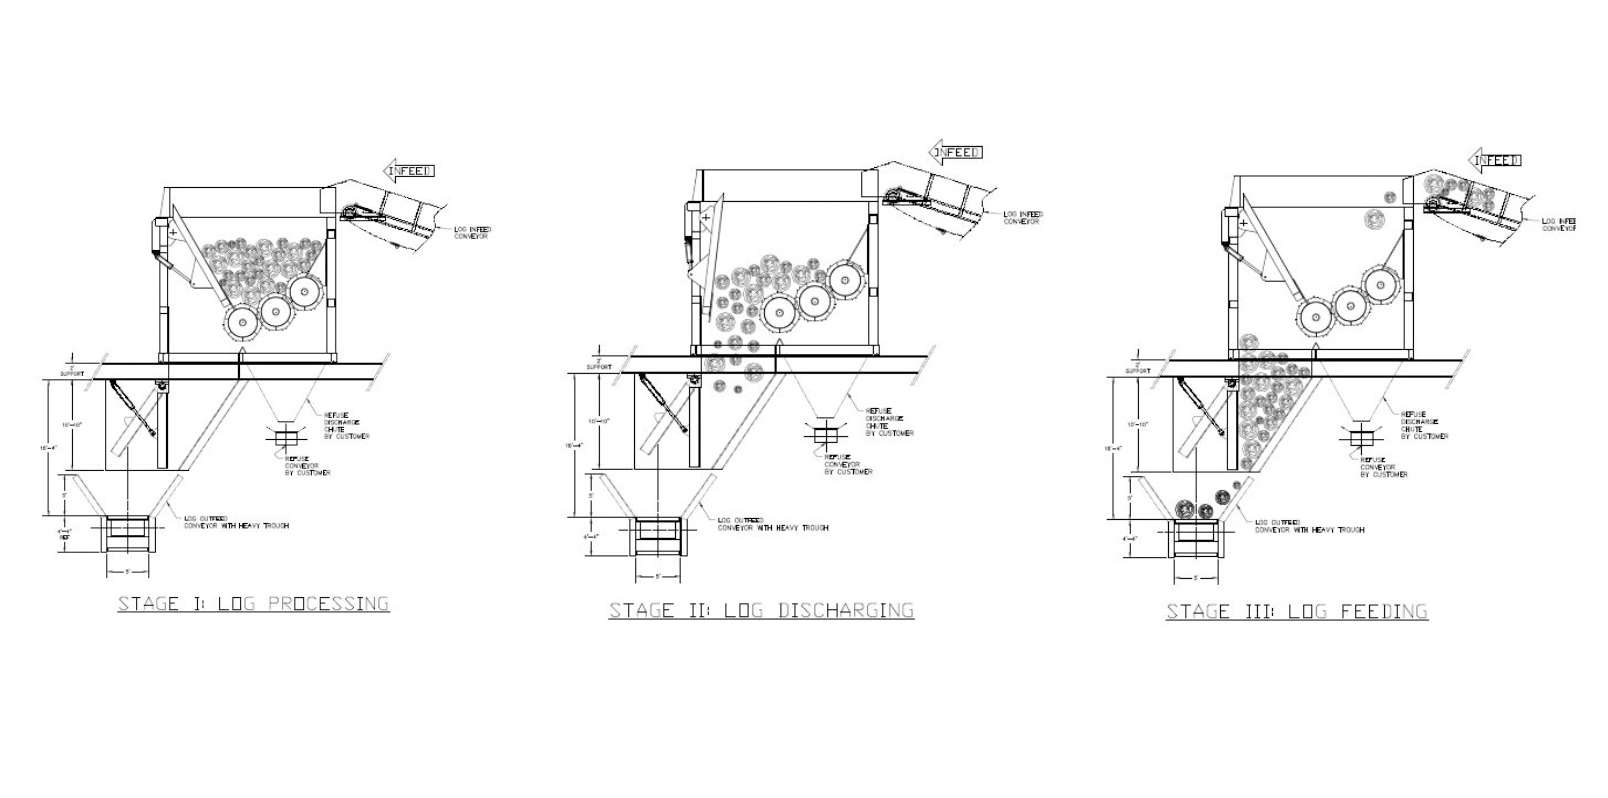 batch-rotary-debarker-processing-discharging-feeding-1100